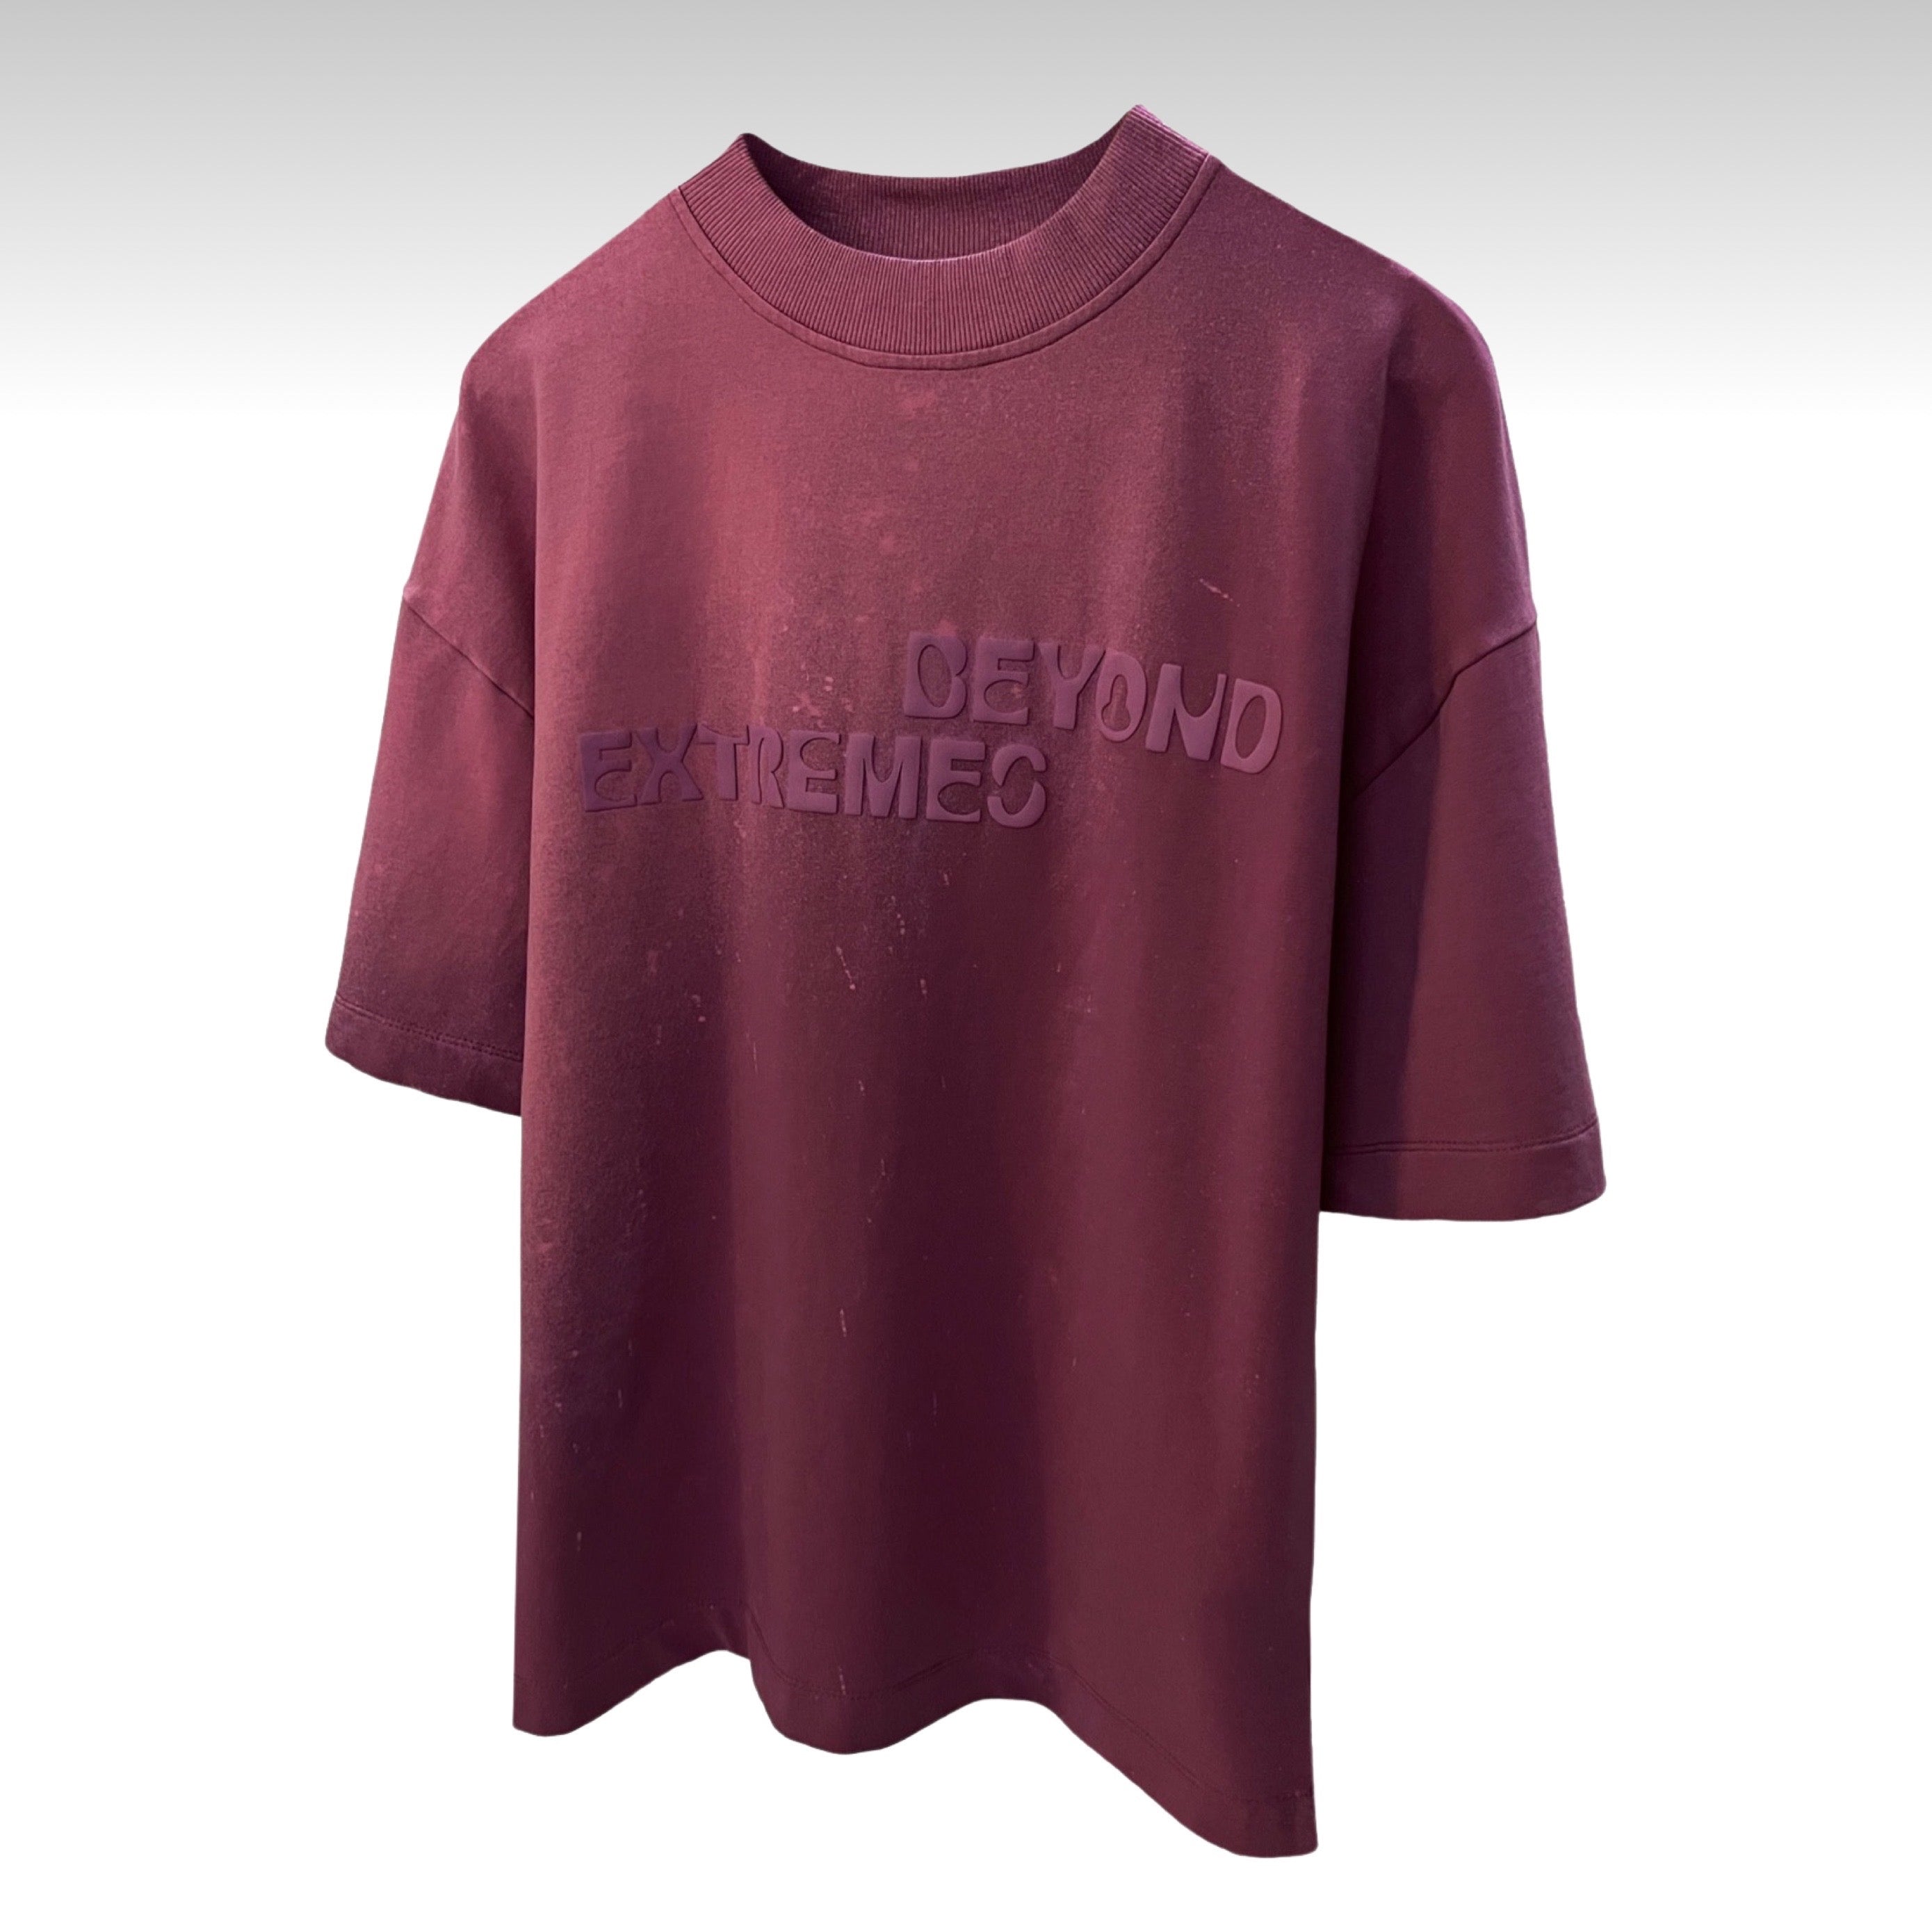 Beyond Extremes T-shirt [Unisex]